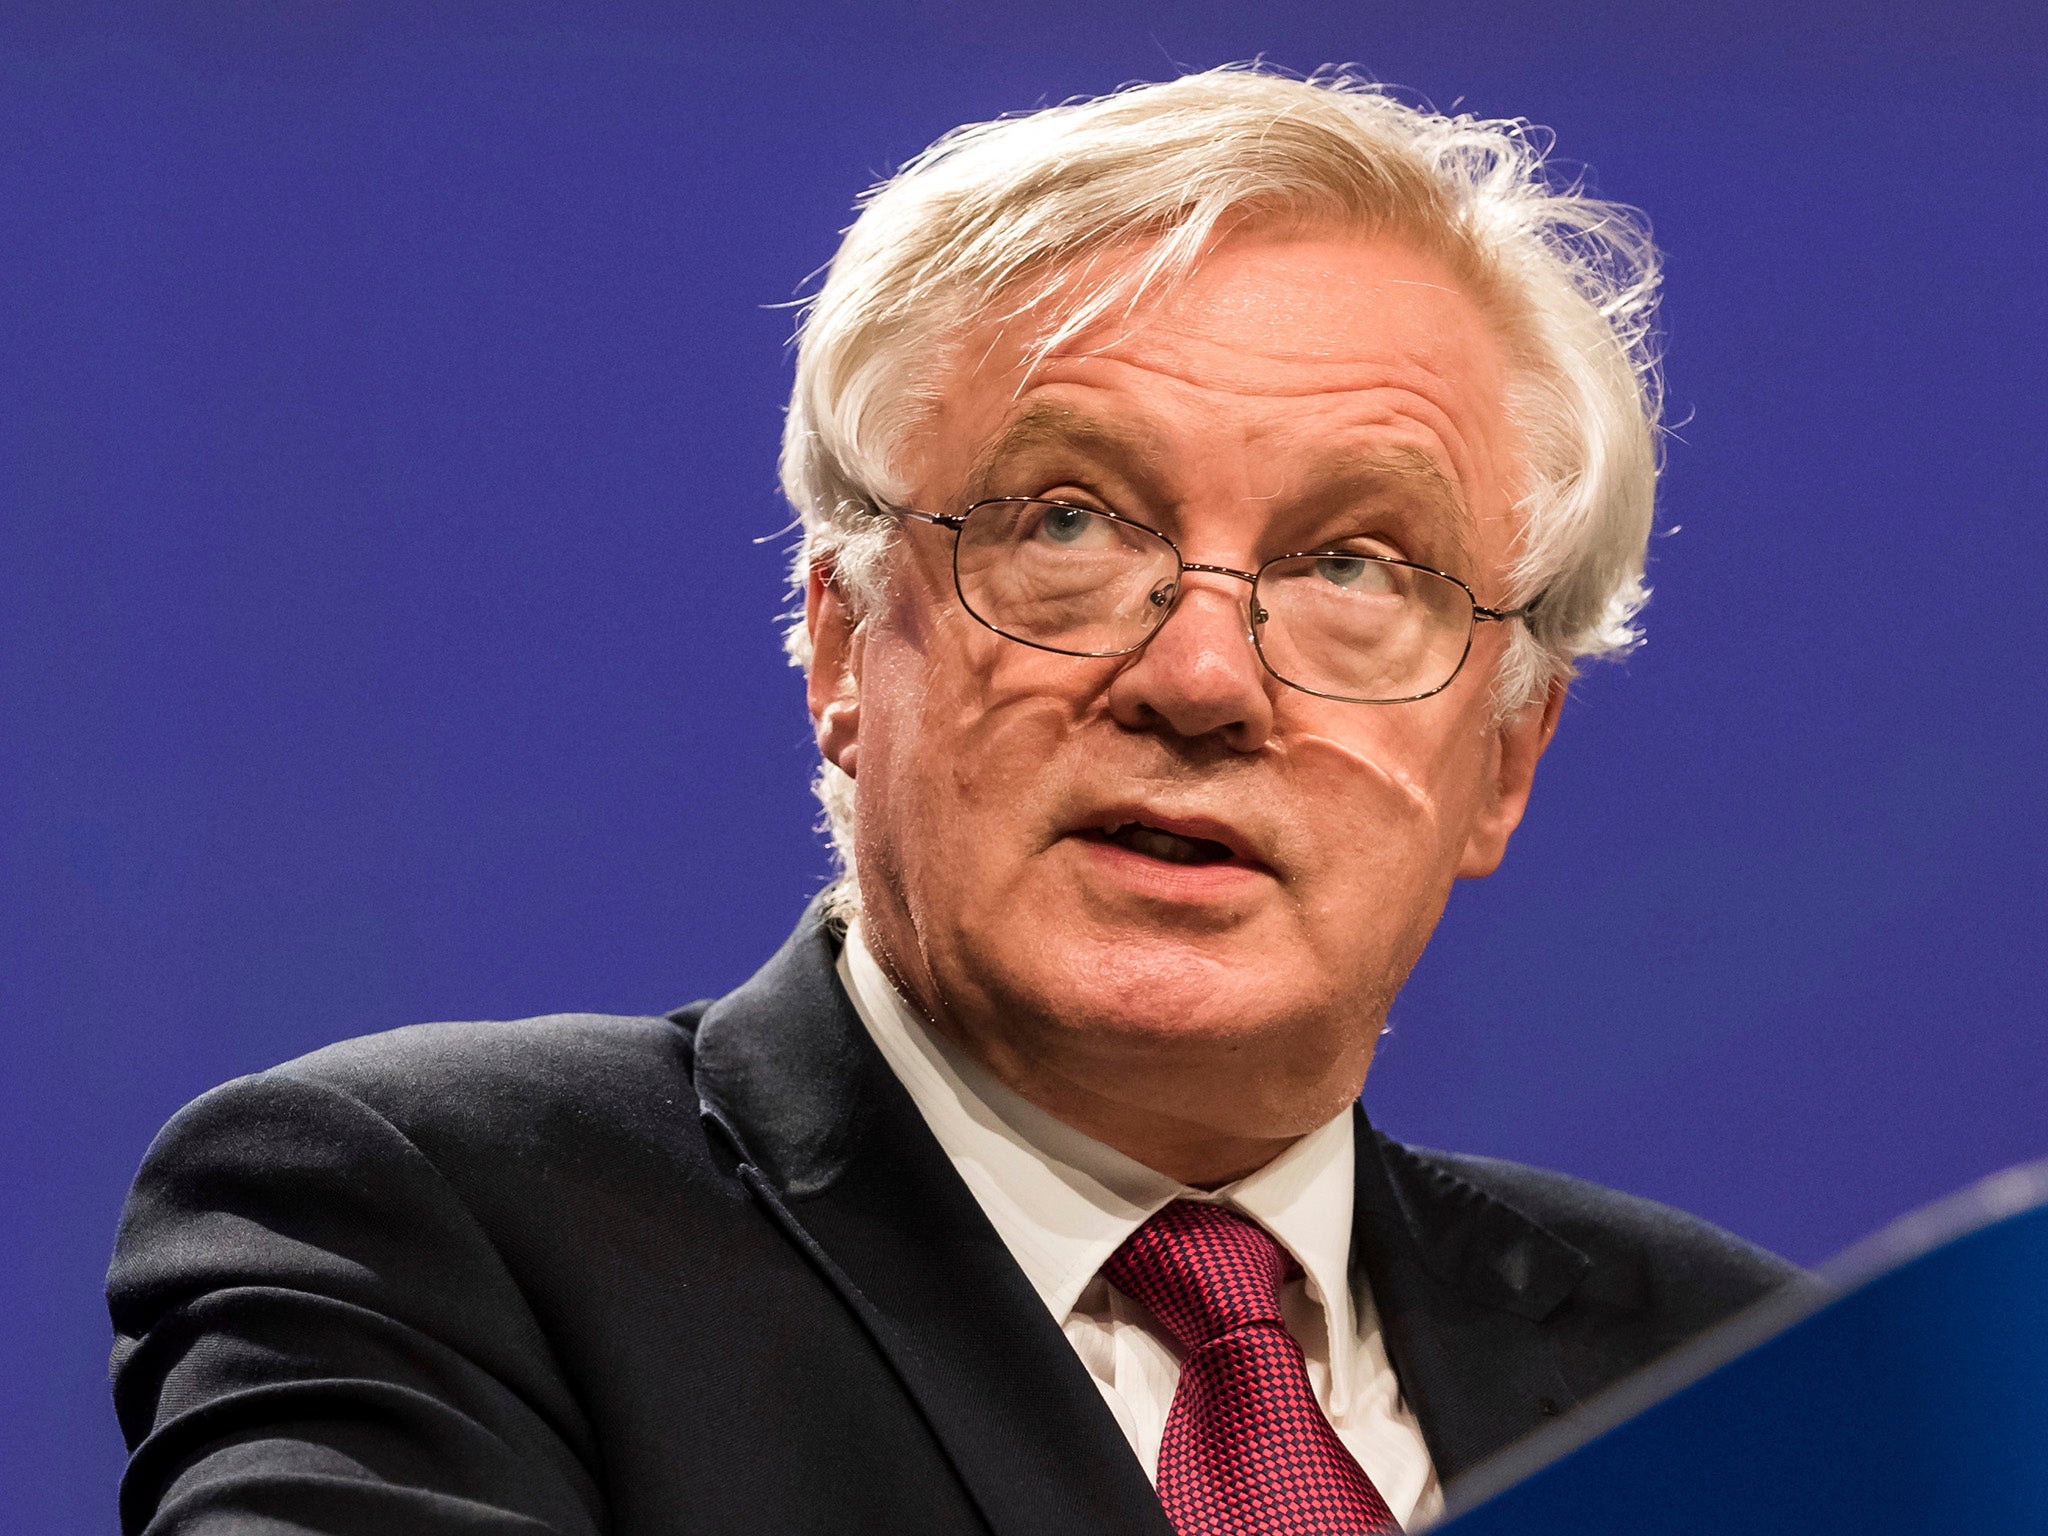 David Davis has begun the Brexit negotiations with the European Union